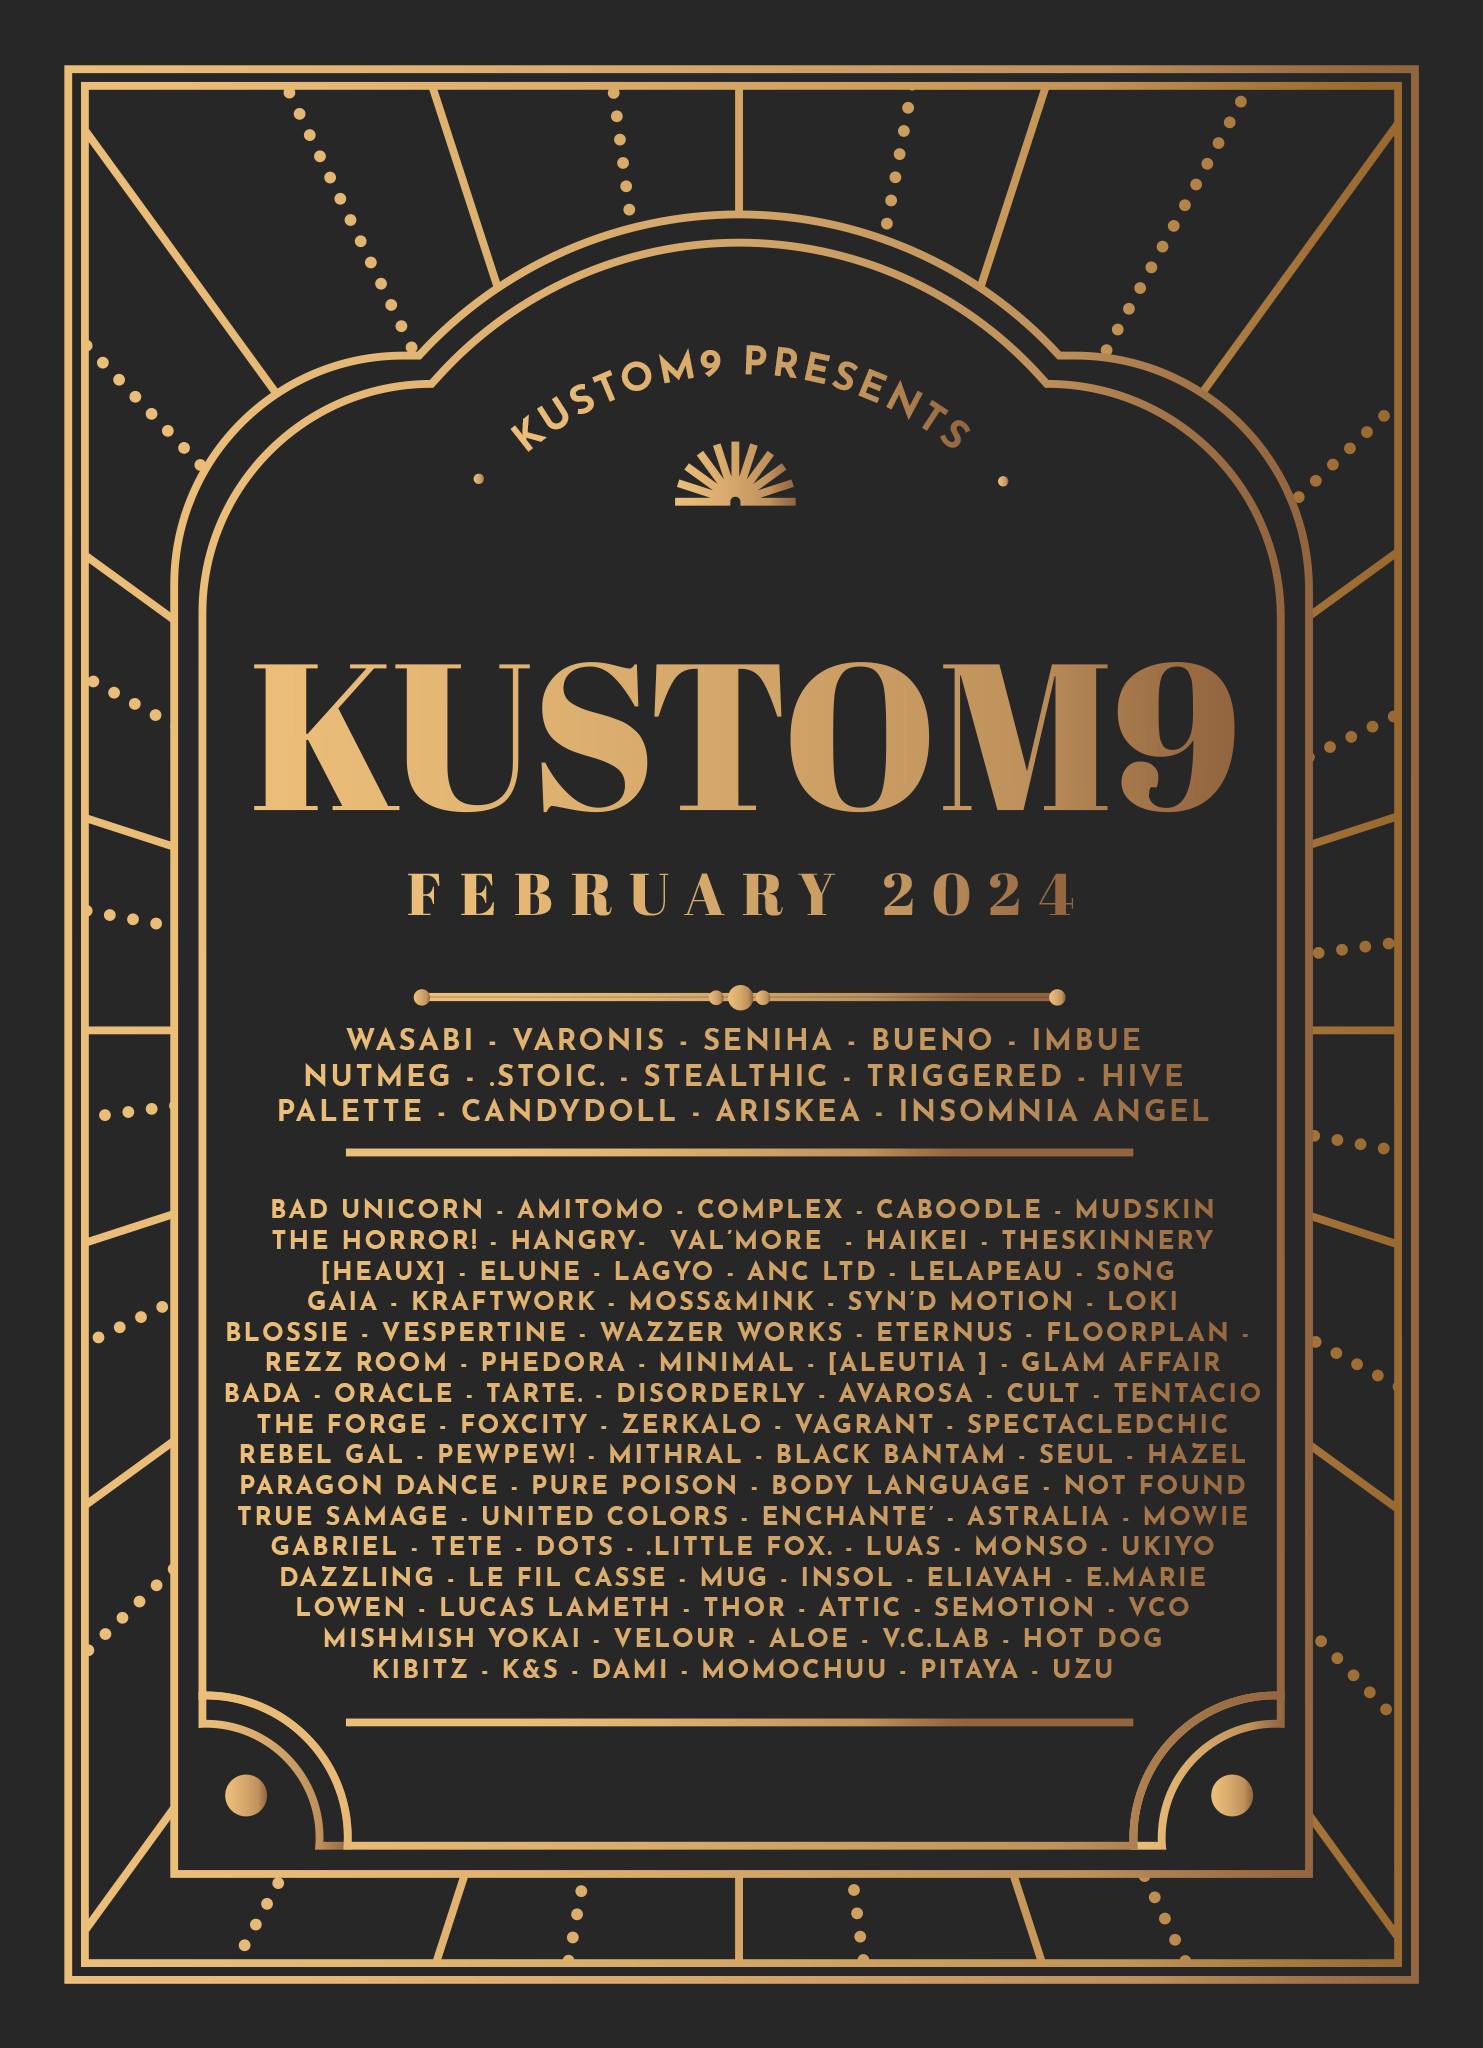 Press Release – Kustom9 – February 2024